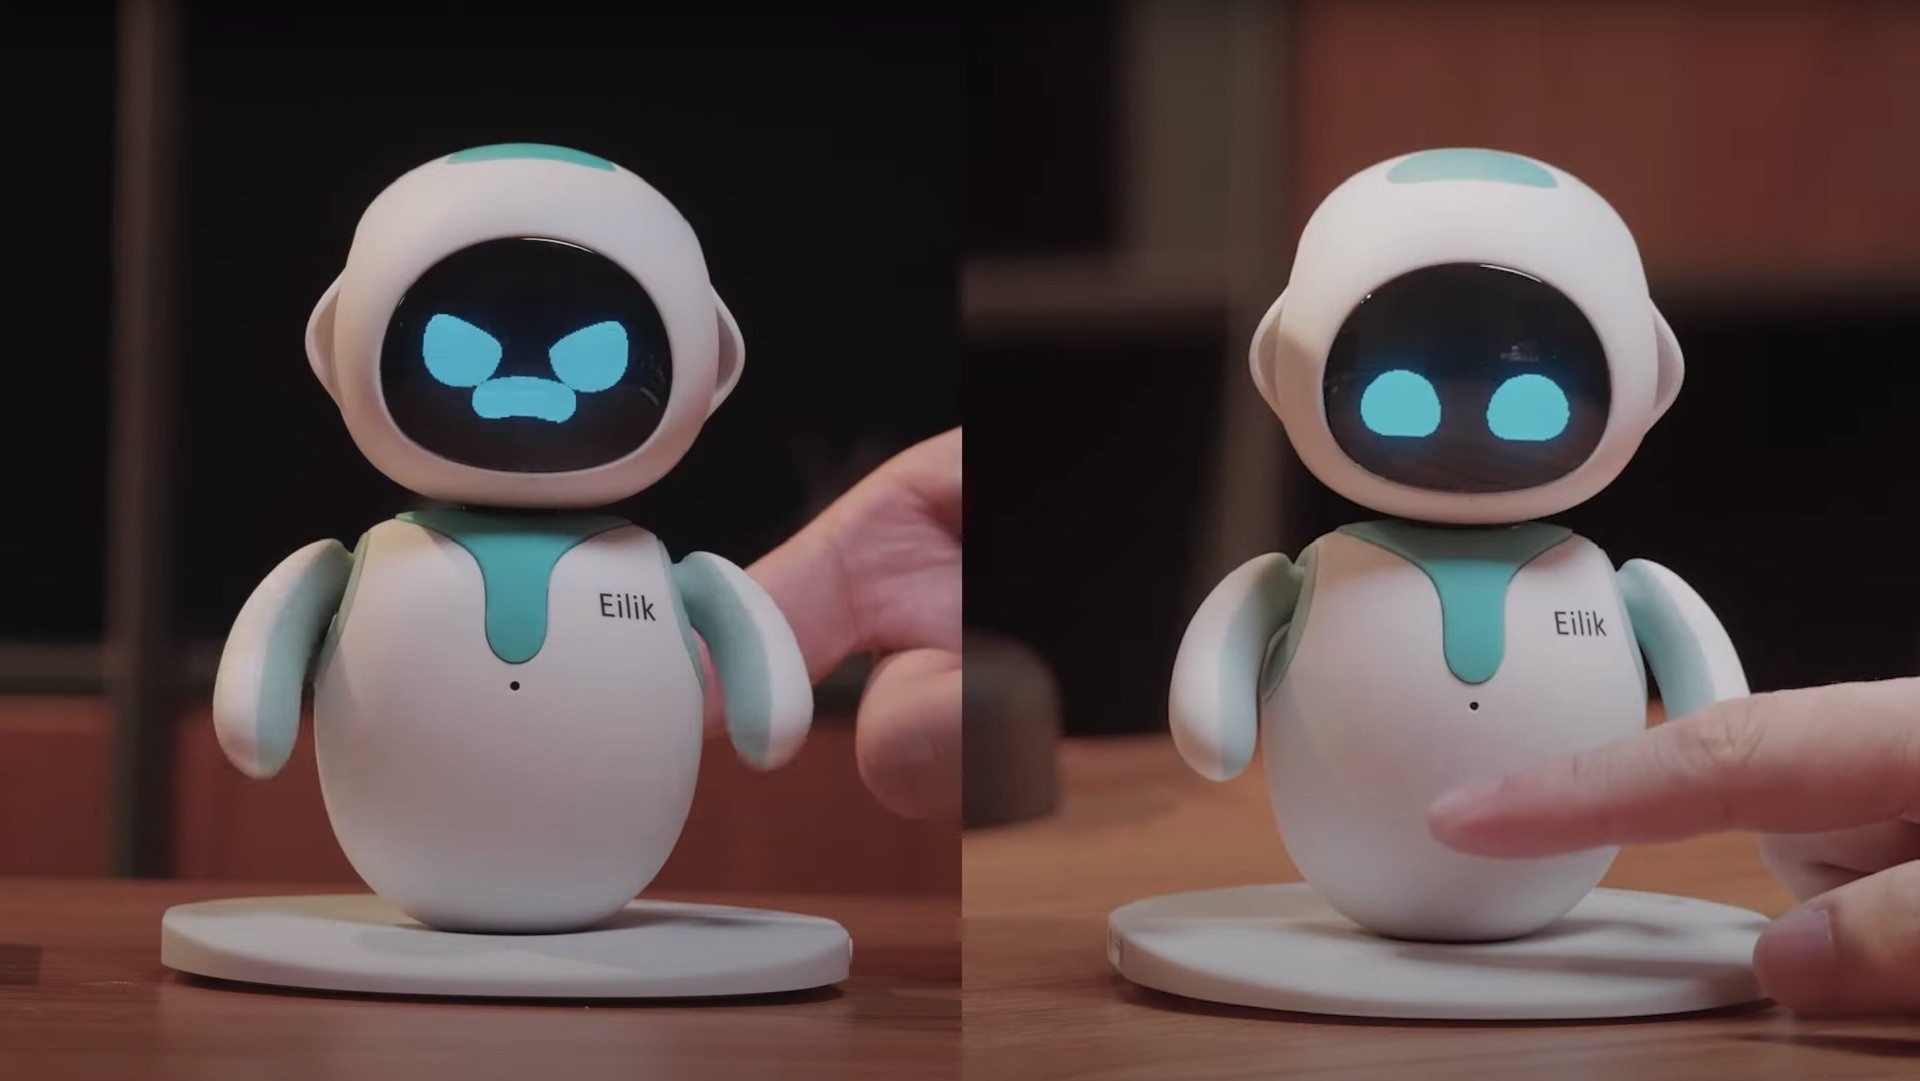 Pet Robot Desktop Toy, Robot Partner, Eilik Robot, Yes Robot